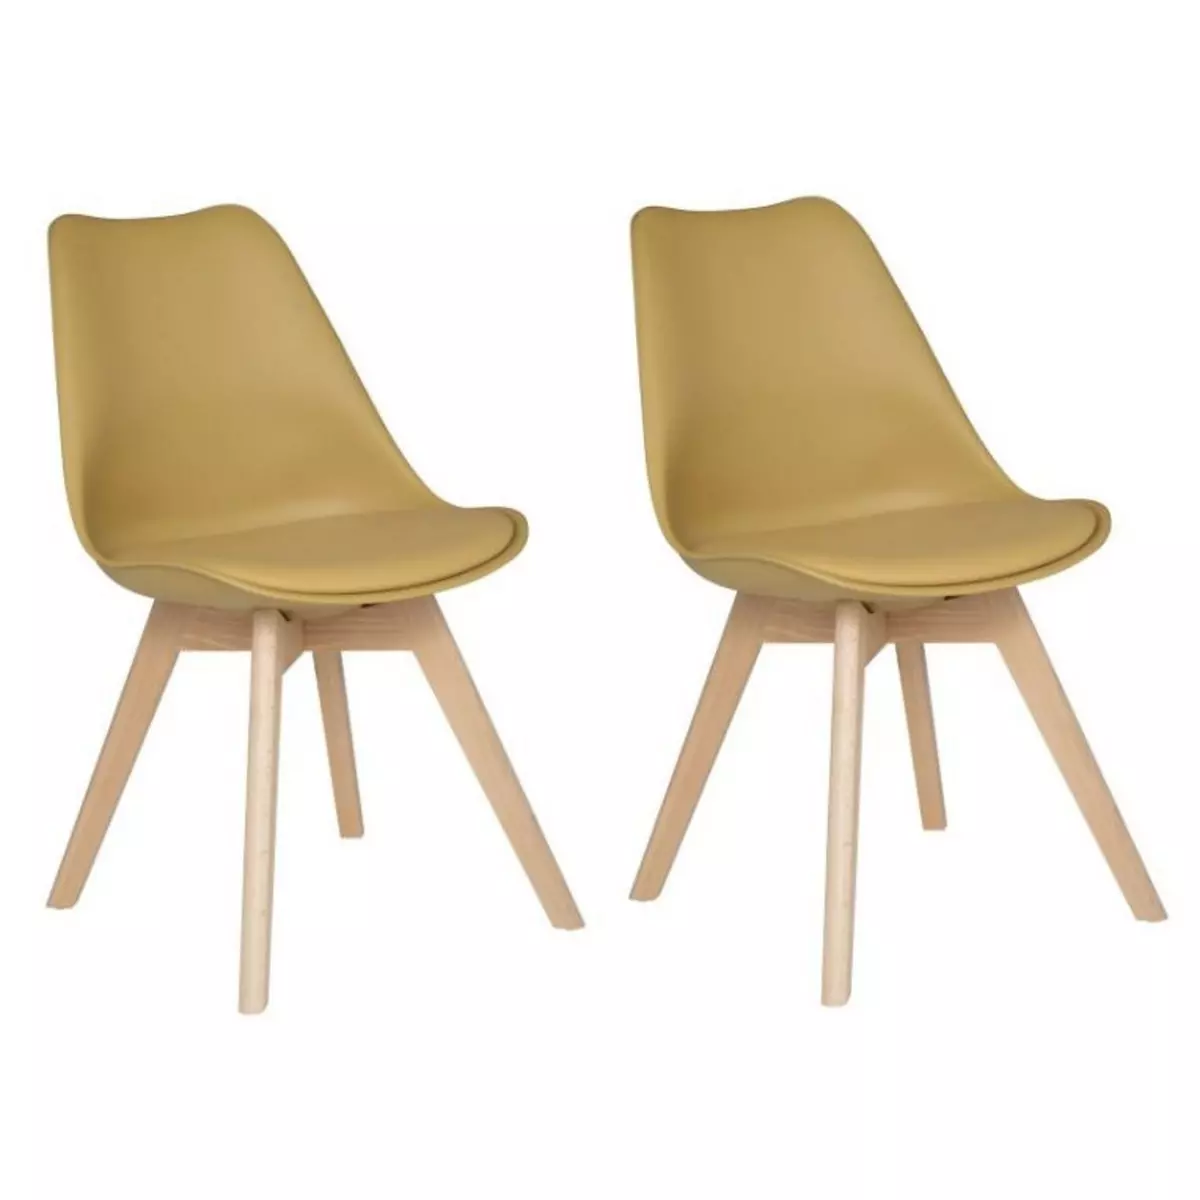 ATMOSPHERA Lot de 2 chaises style scandinave pieds bois massif coloris jaune ocre OPRA